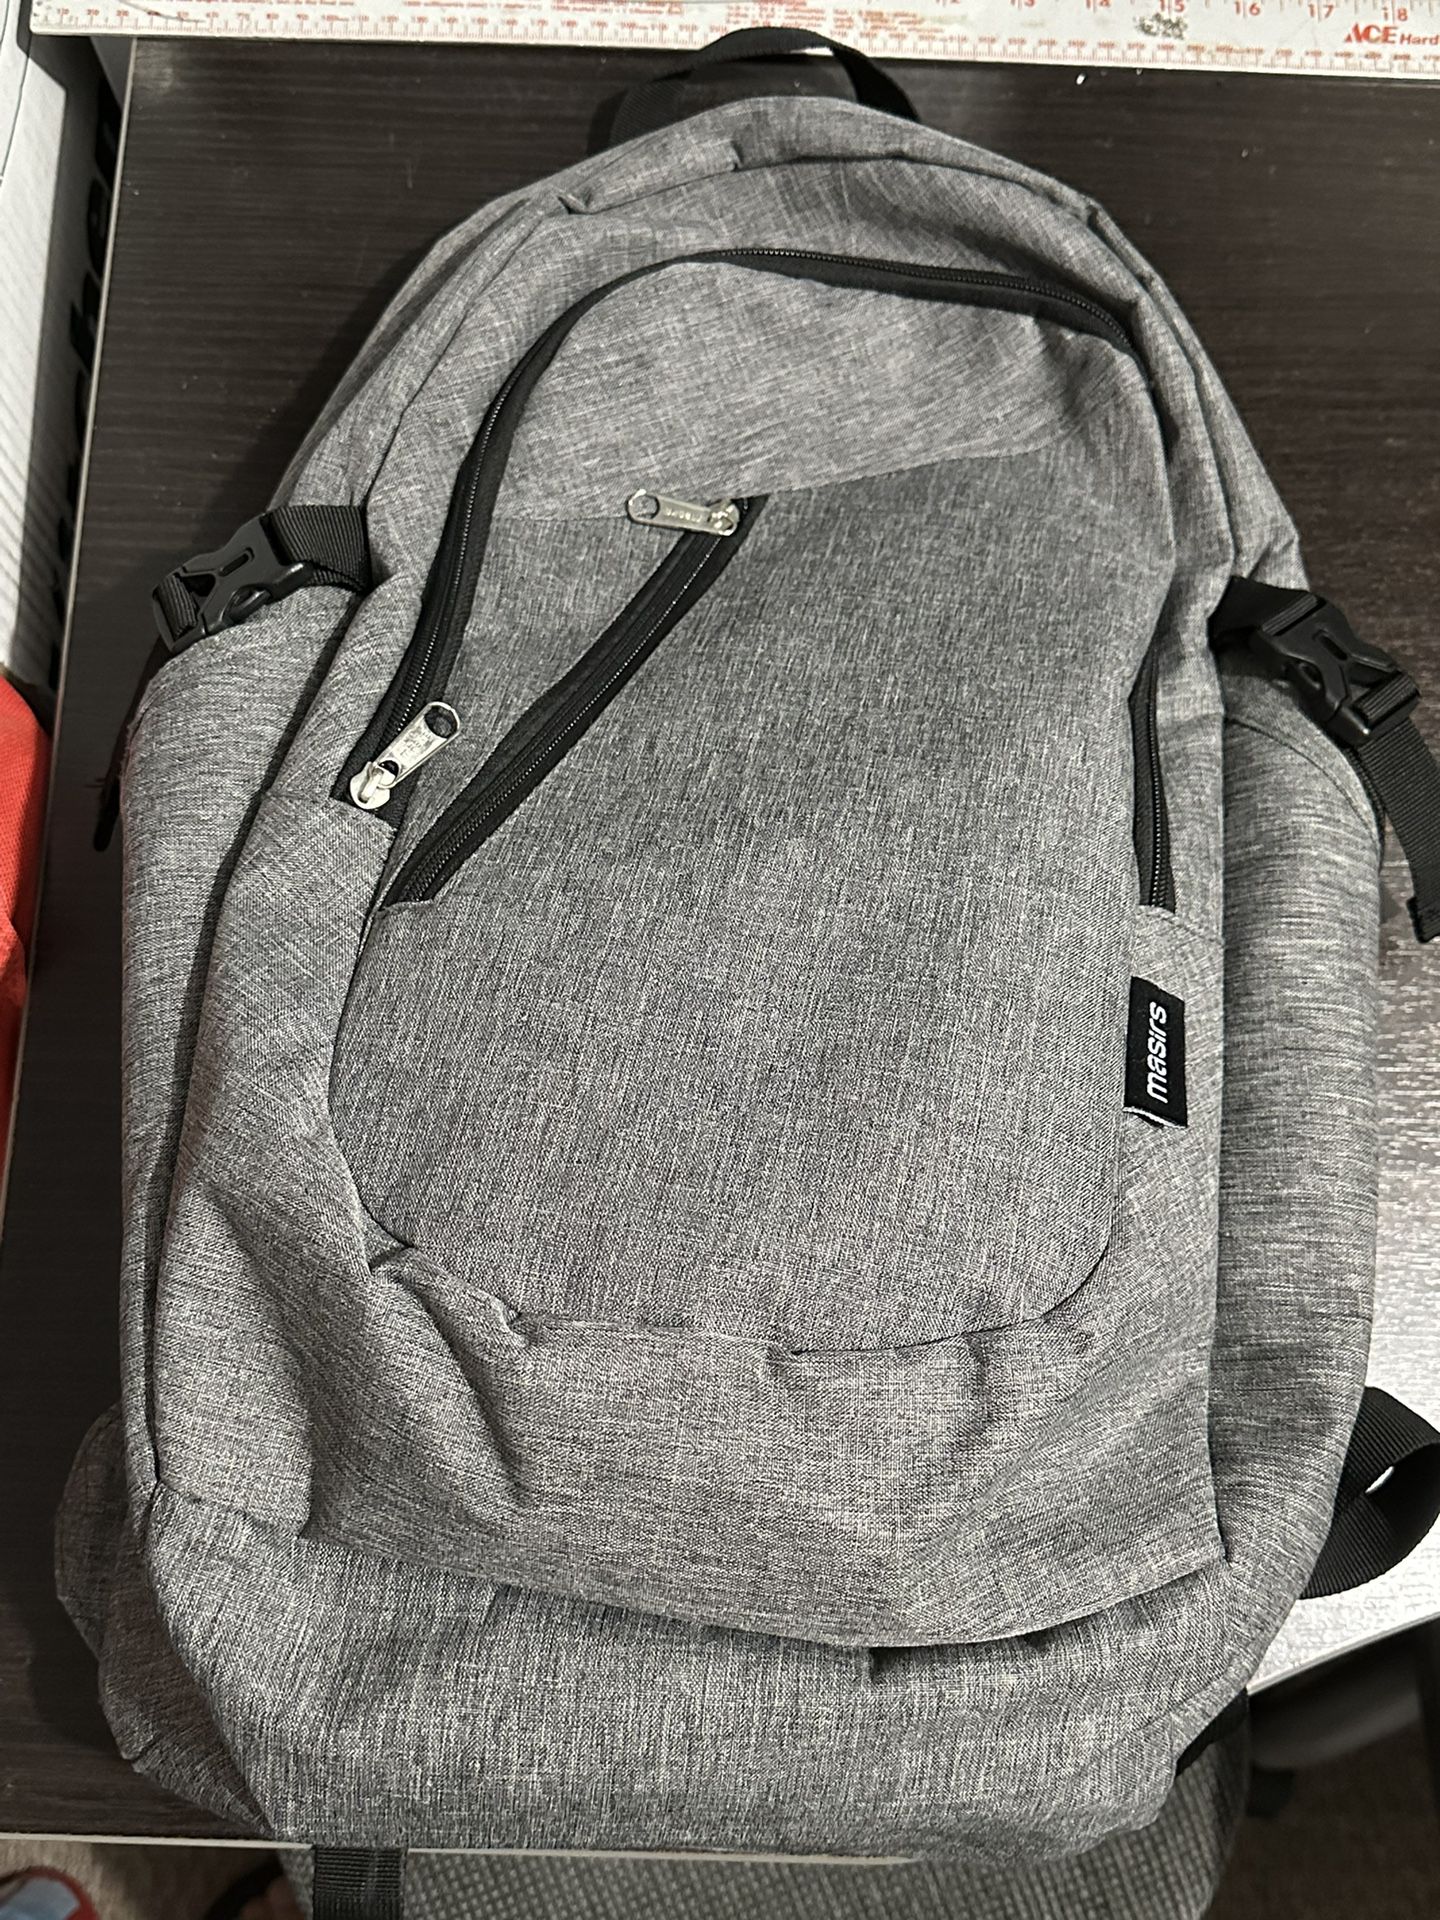 Masirs Laptop Backpack